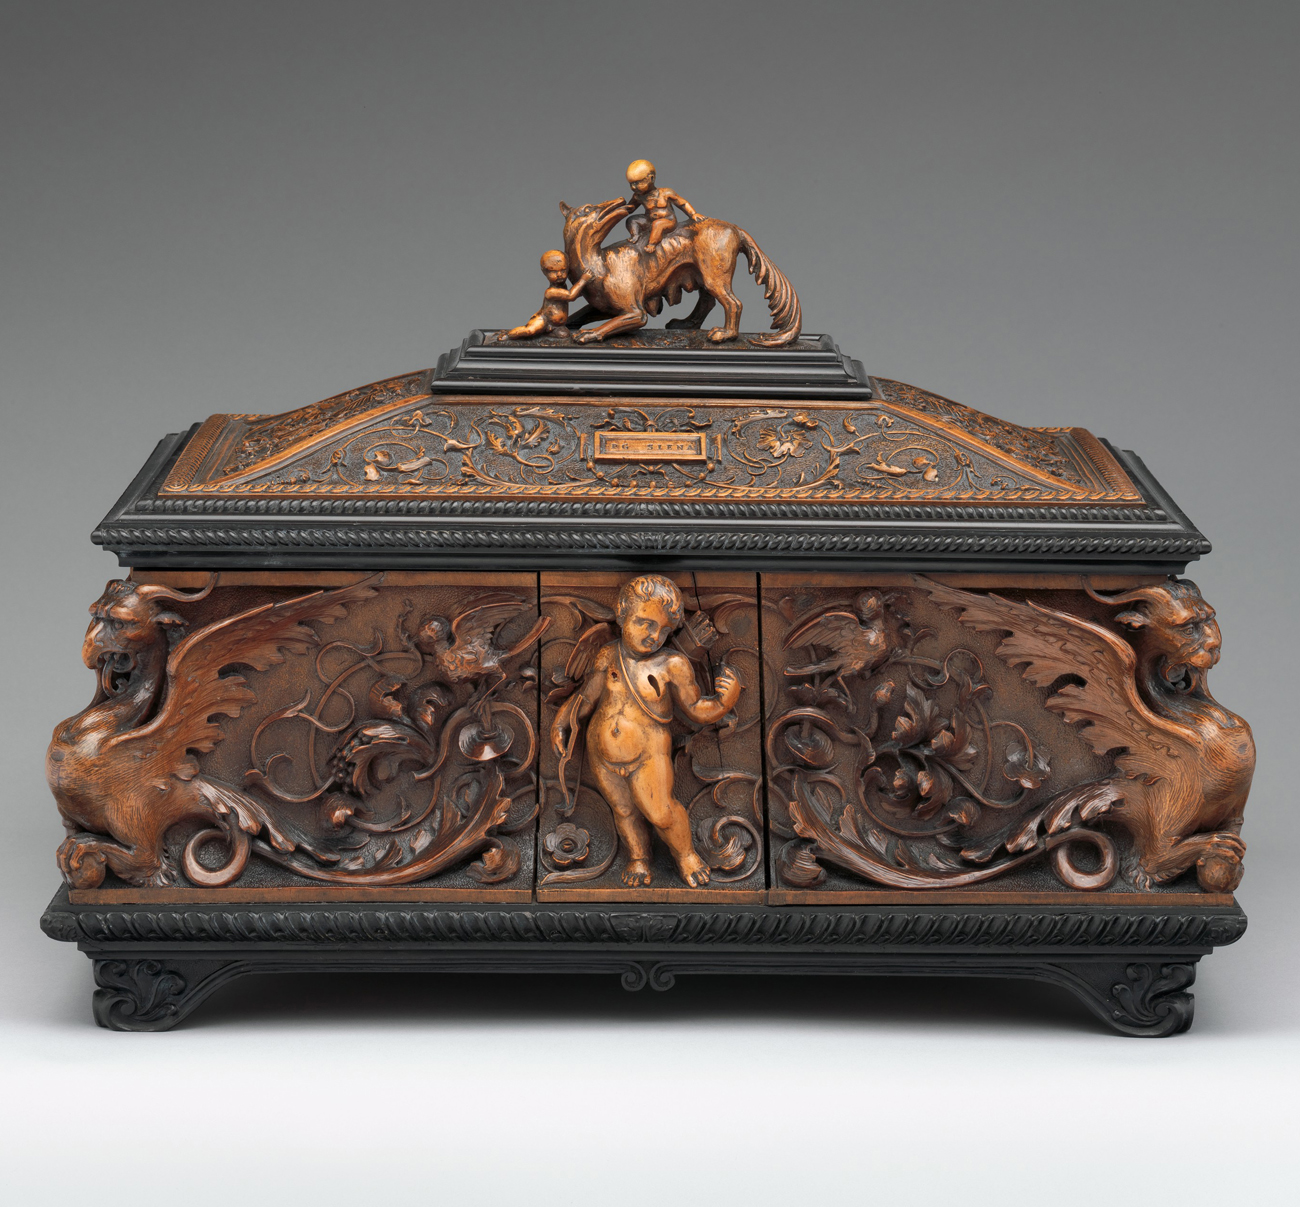 13-pietro-giusti-jewellery-casket-1857-walnut-ebony-11x151-10-25in-met-mus-ny.jpg